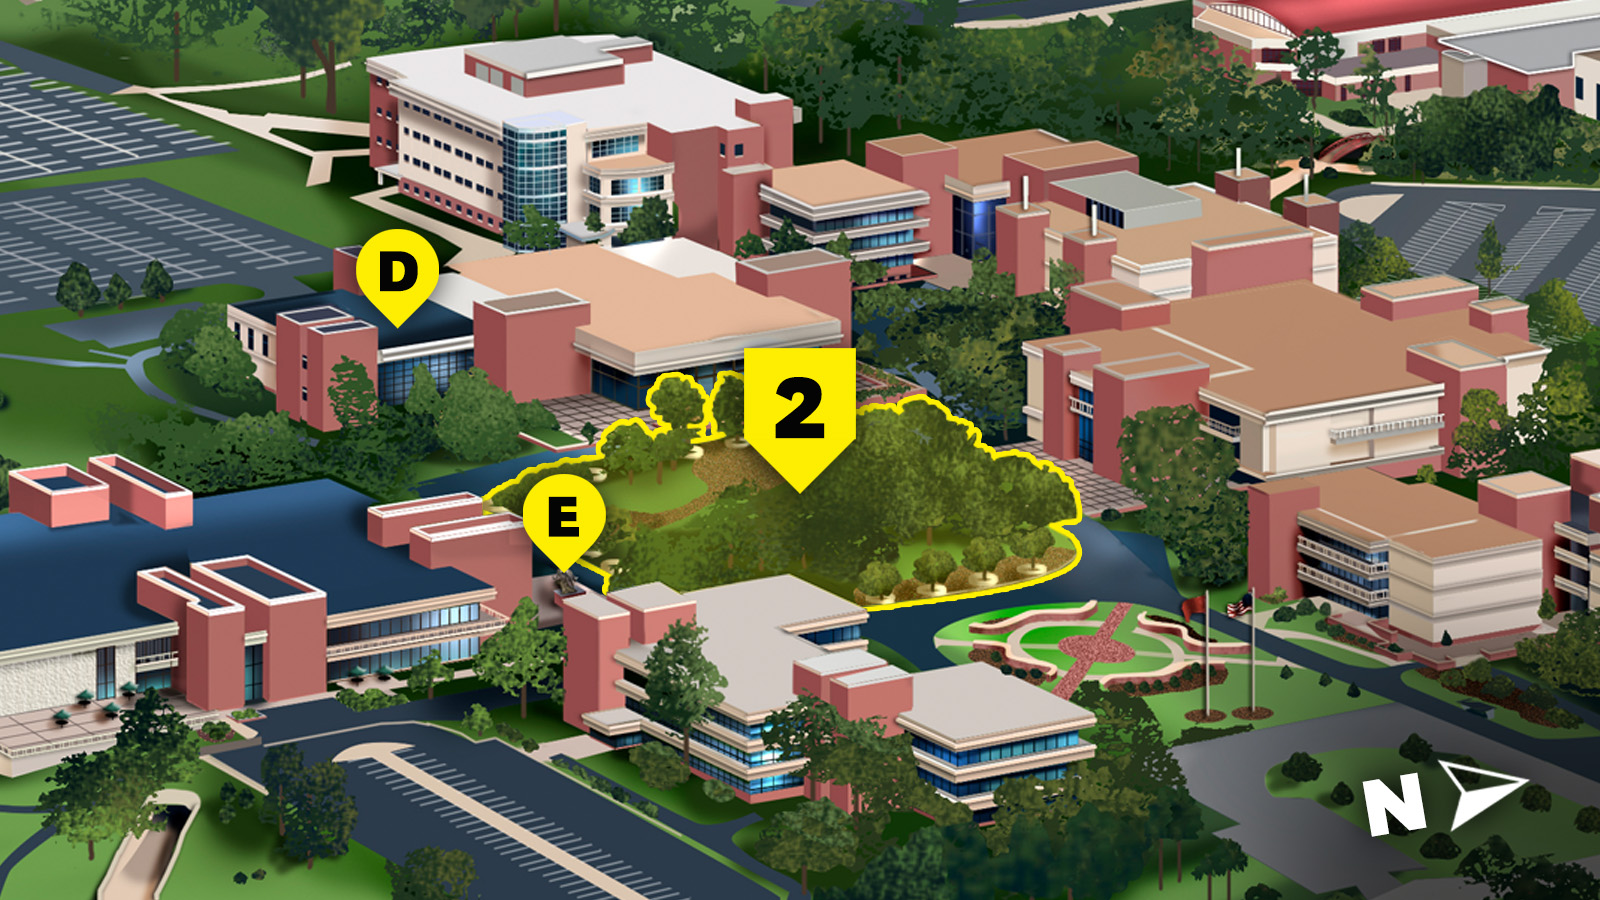 campus map highlight areas near stratton quad